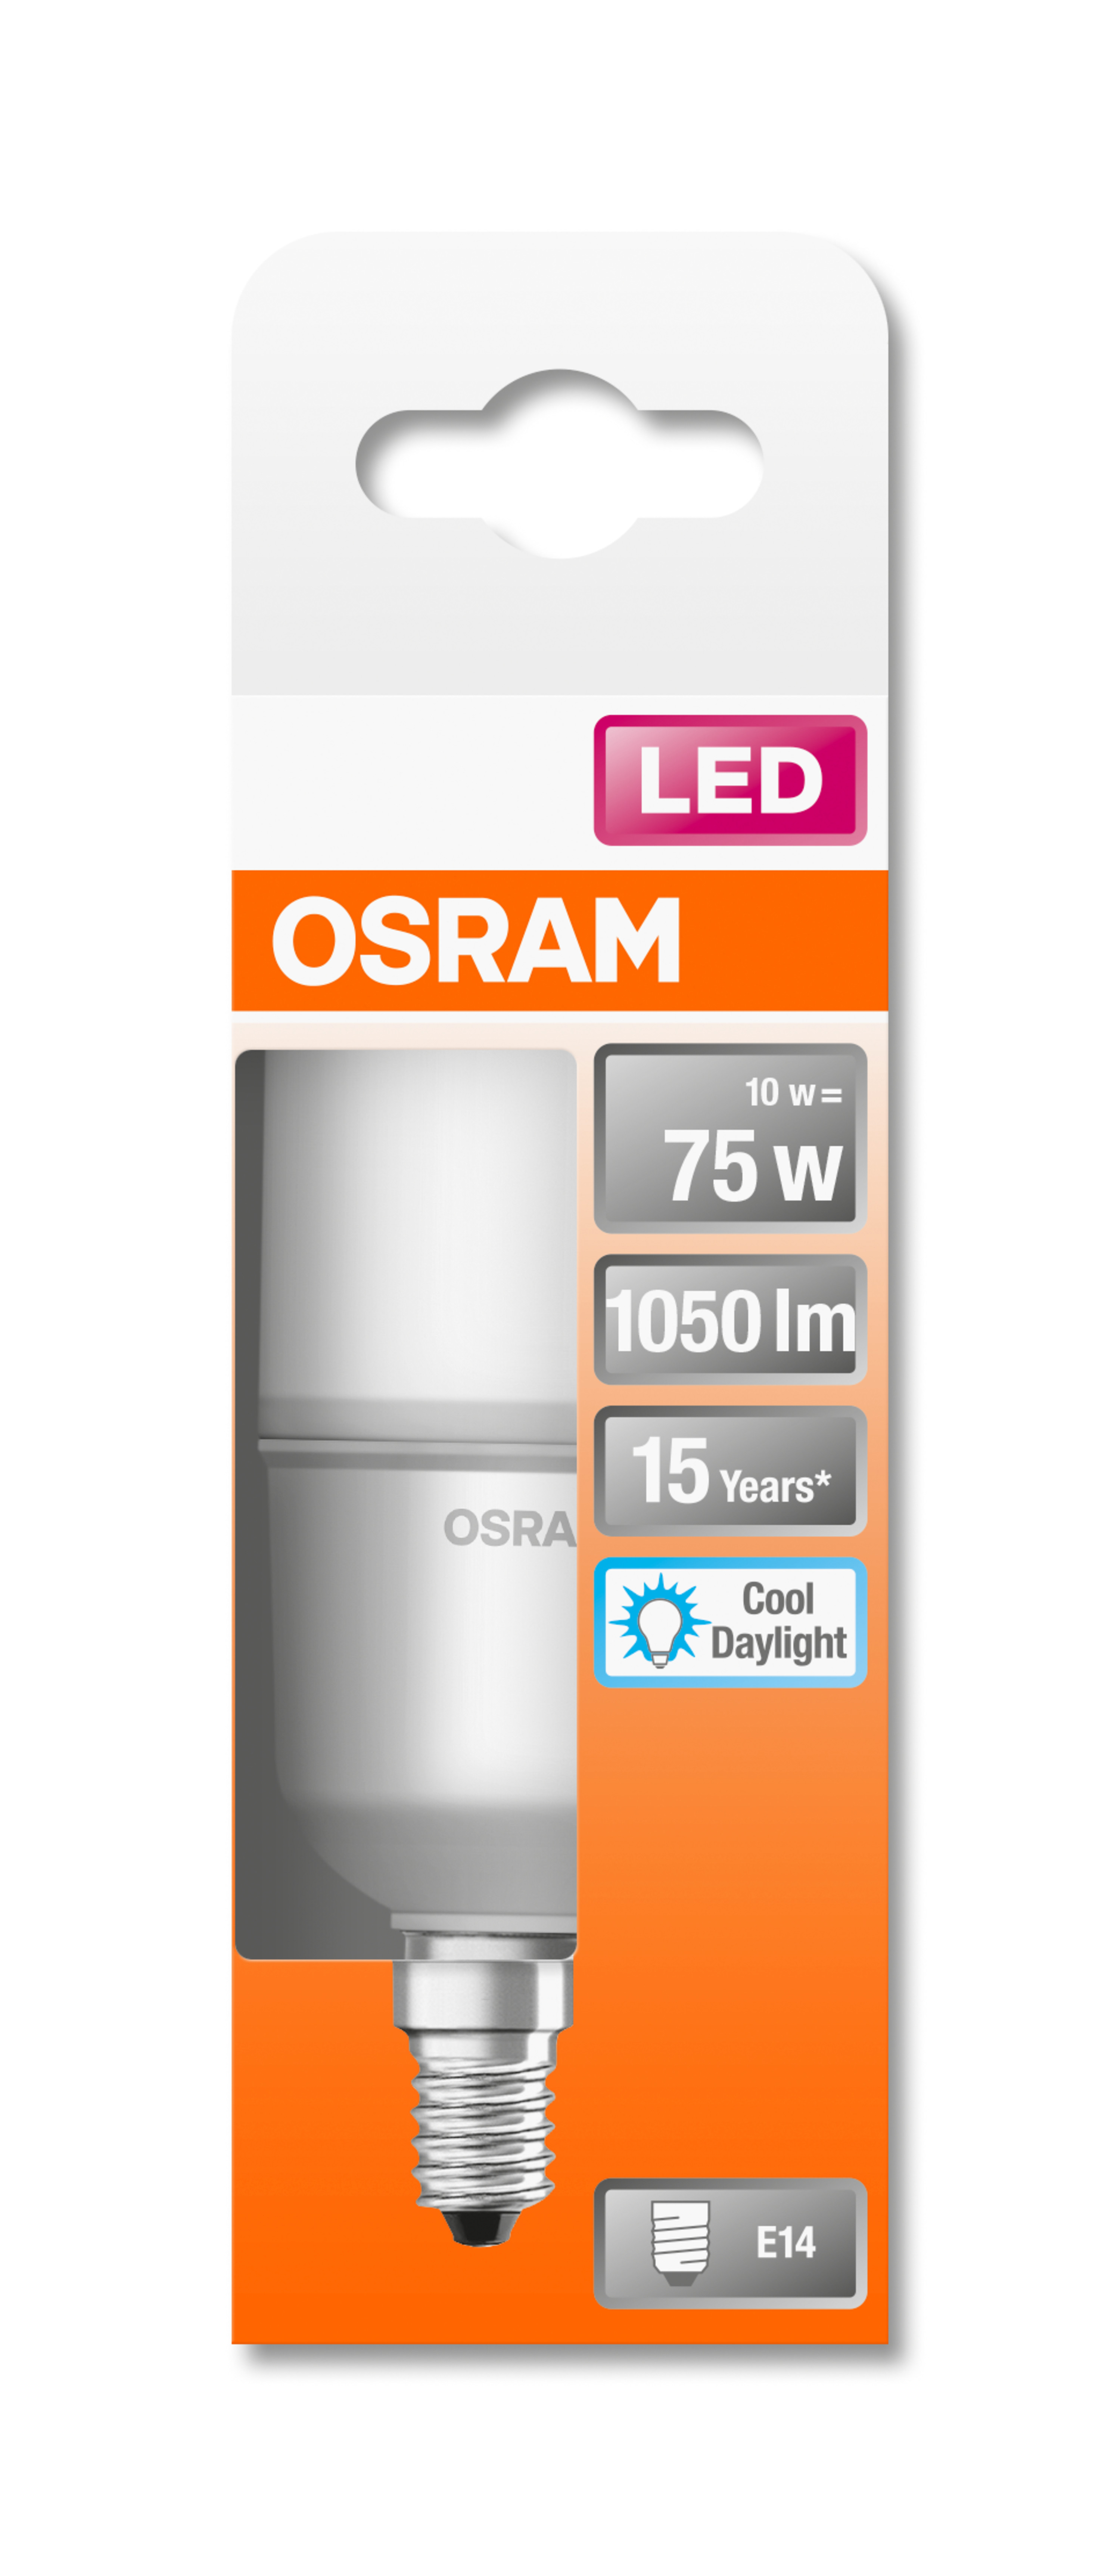 OSRAM  LED STAR STICK Lampe lumen 1050 LED Kaltweiß